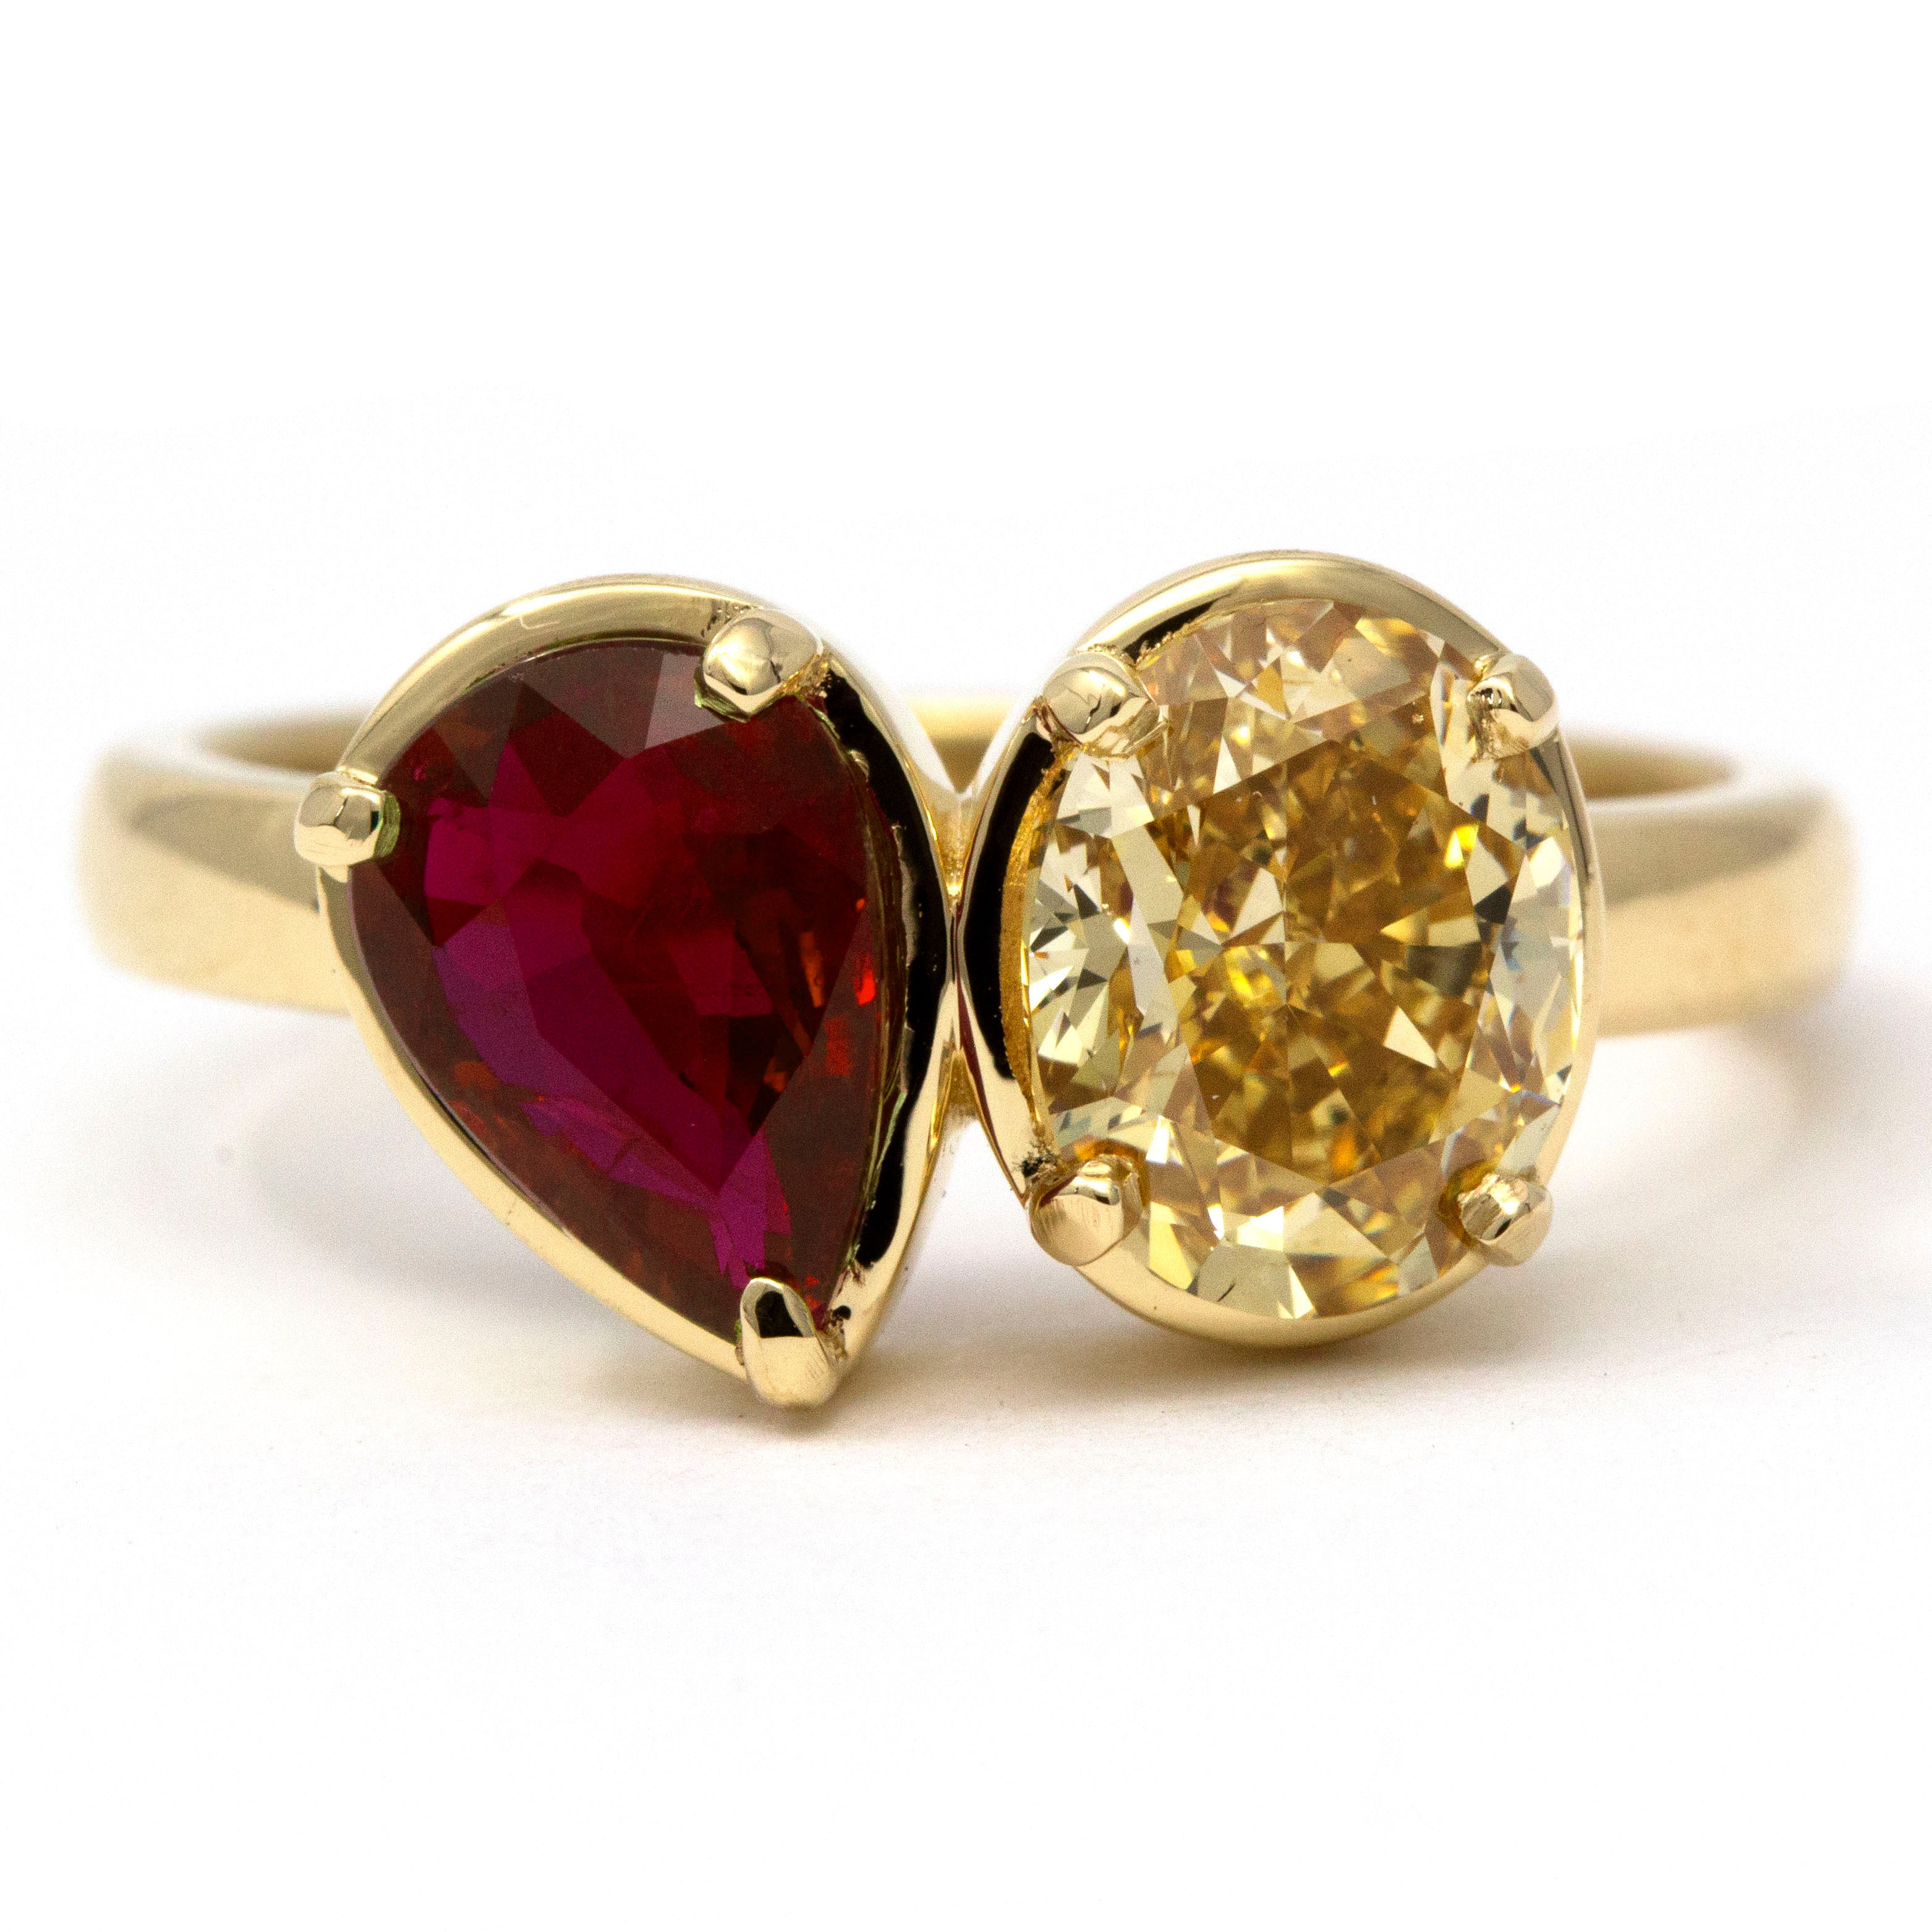 "Moi Et Toi" Fancy Yellow-Brown Diamond & Ruby 18K Gold Ring